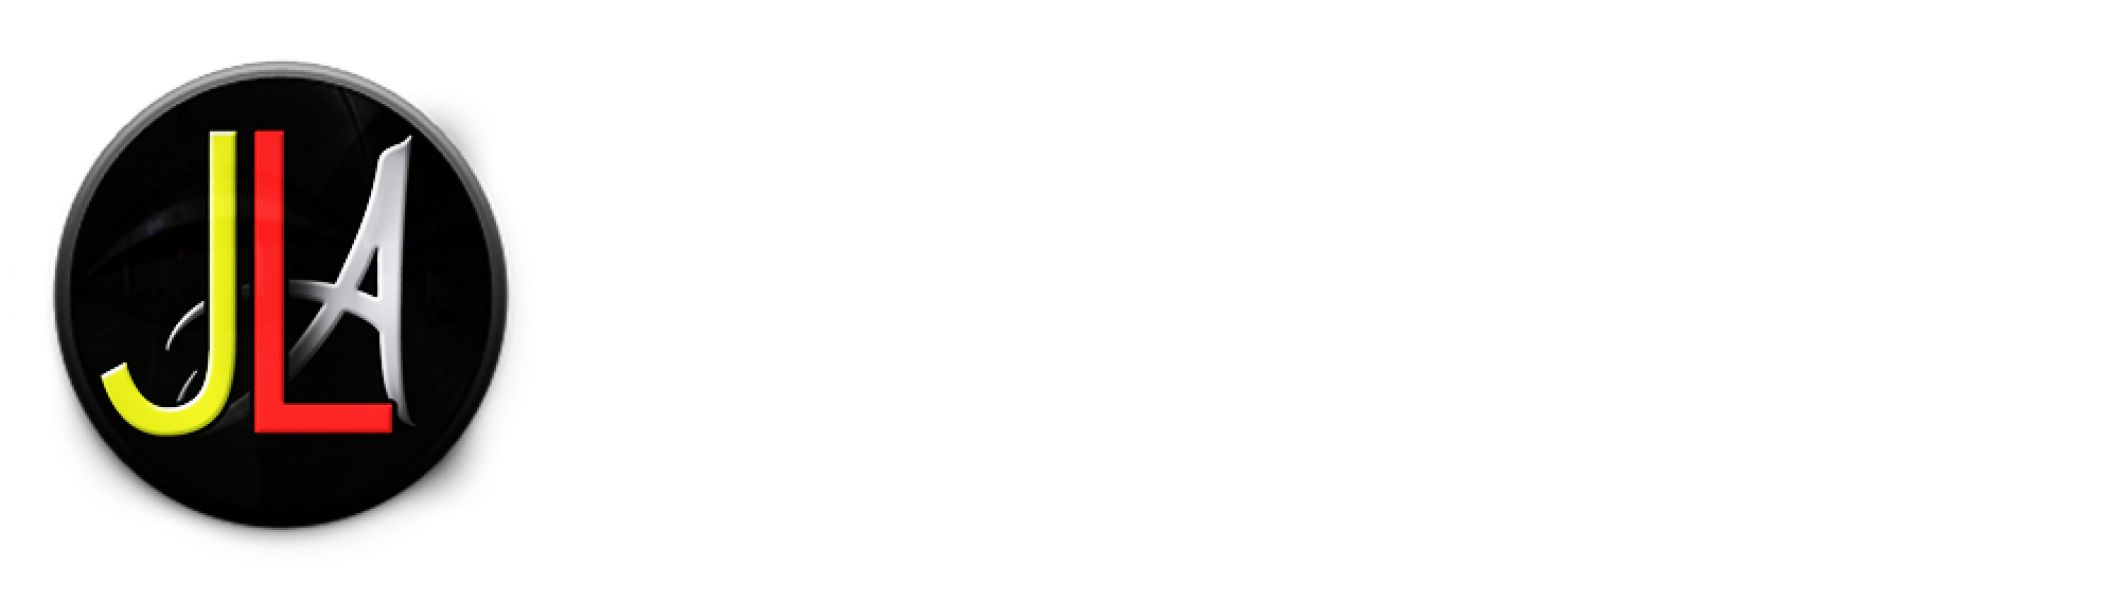 JLA Marcenaria & Alvenaria